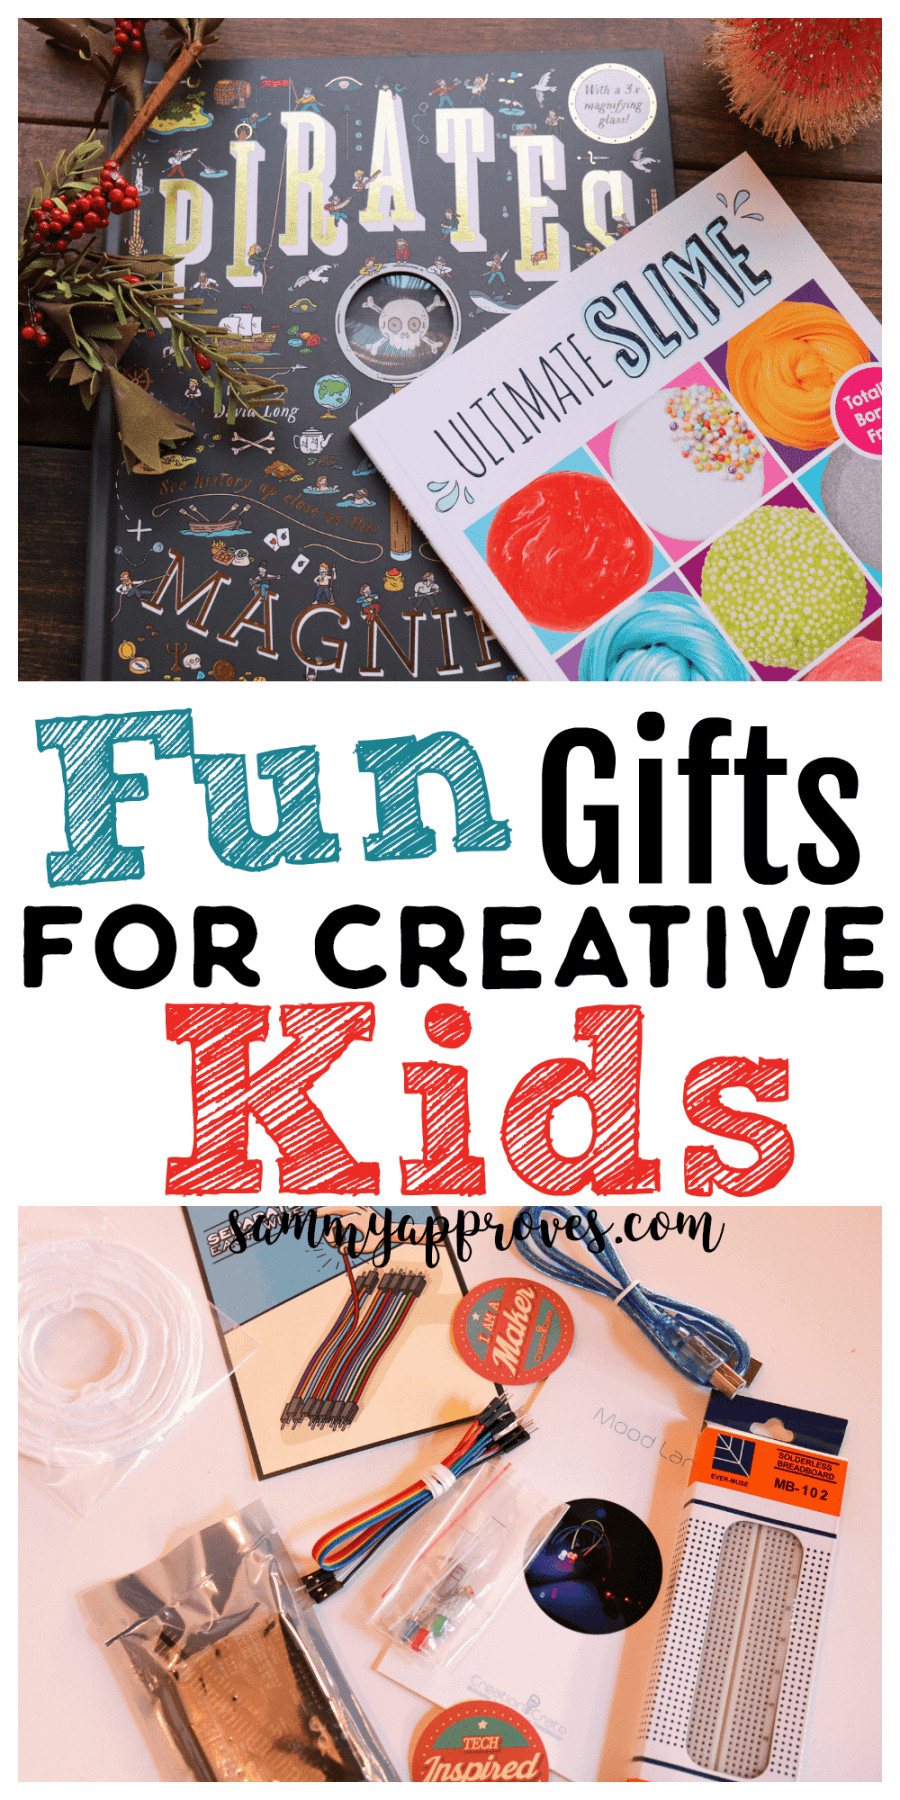 Creative Kids Gifts
 Fun Gifts for Creative Kids